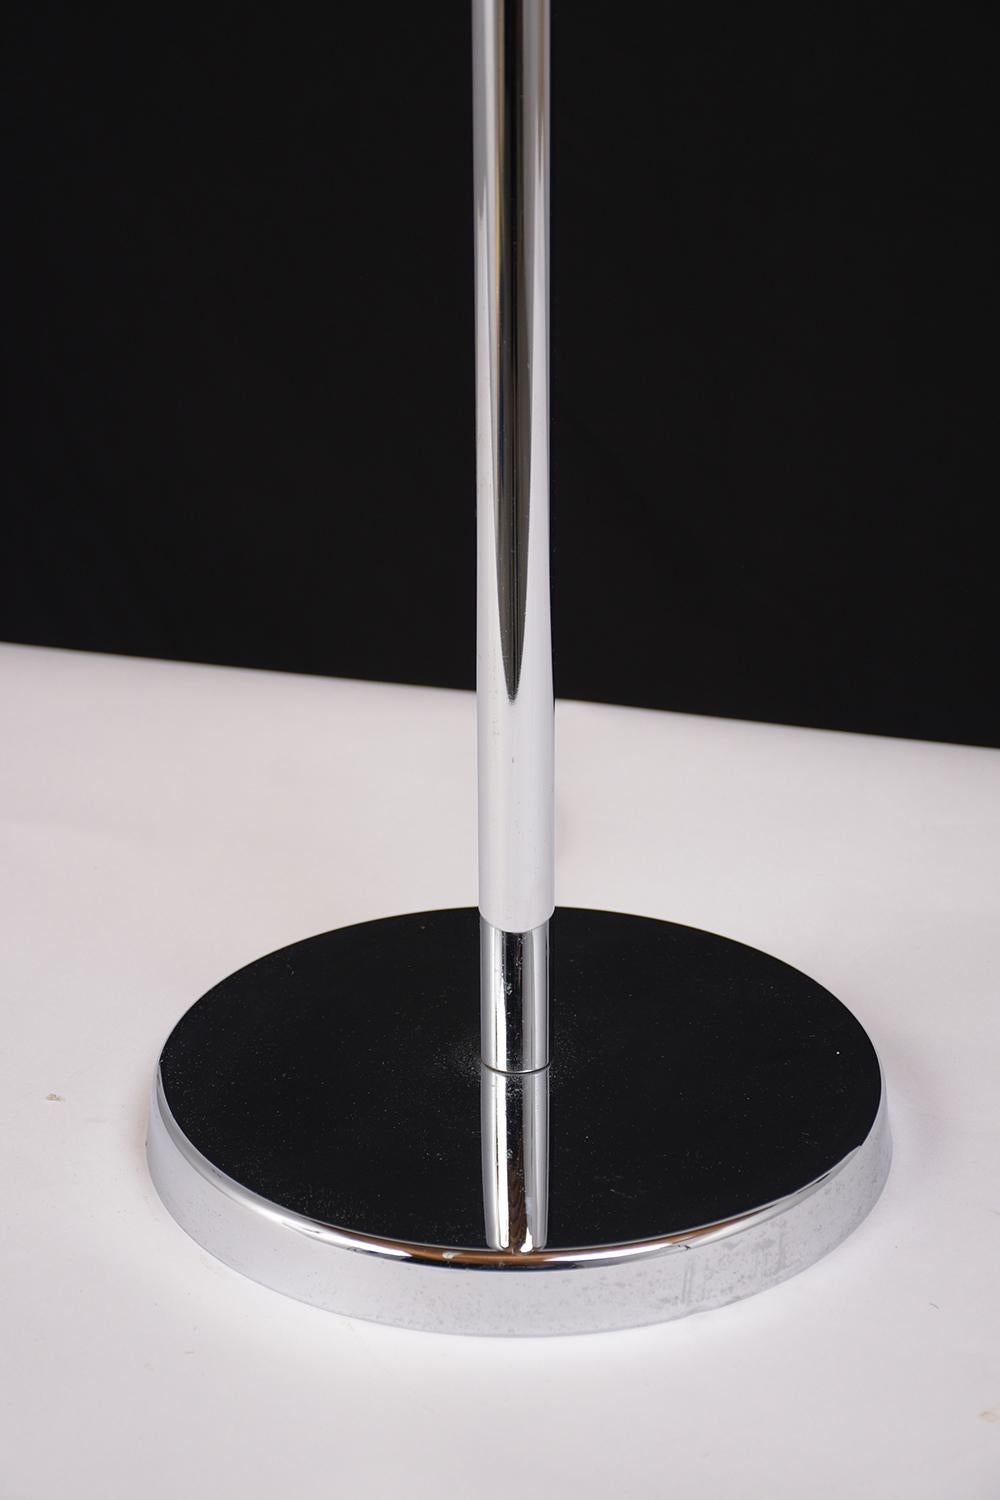 Plated 1960's Modern Chrome Adjustable Floor Lamp